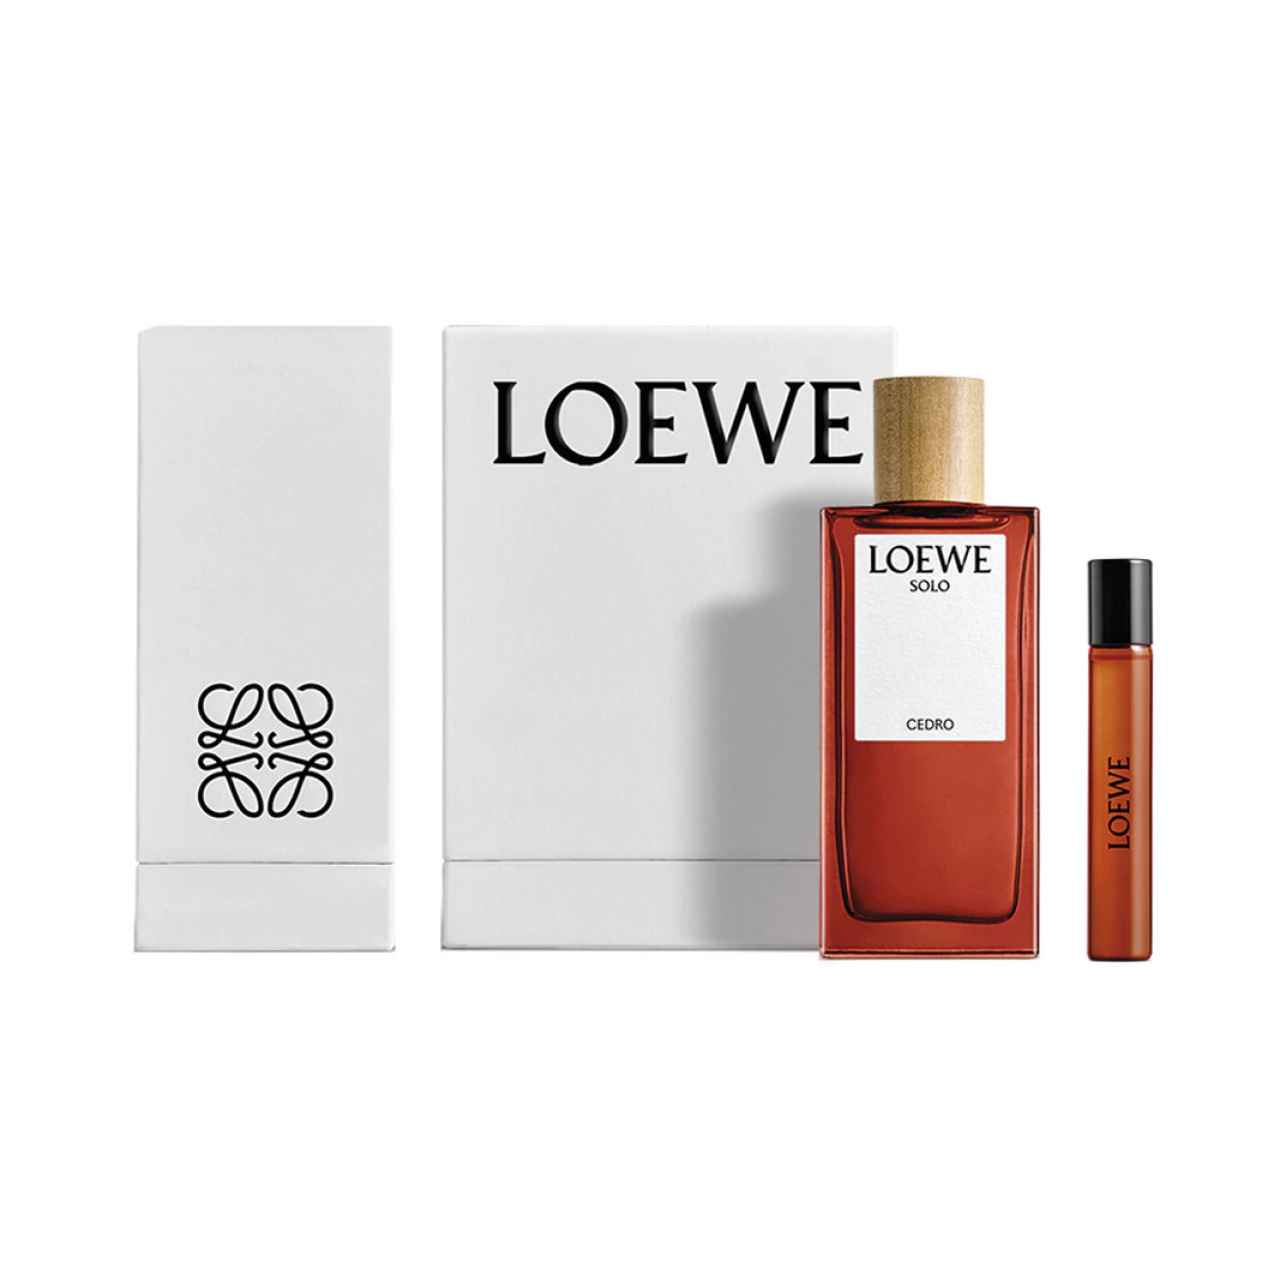 Perfume de LOEWE.